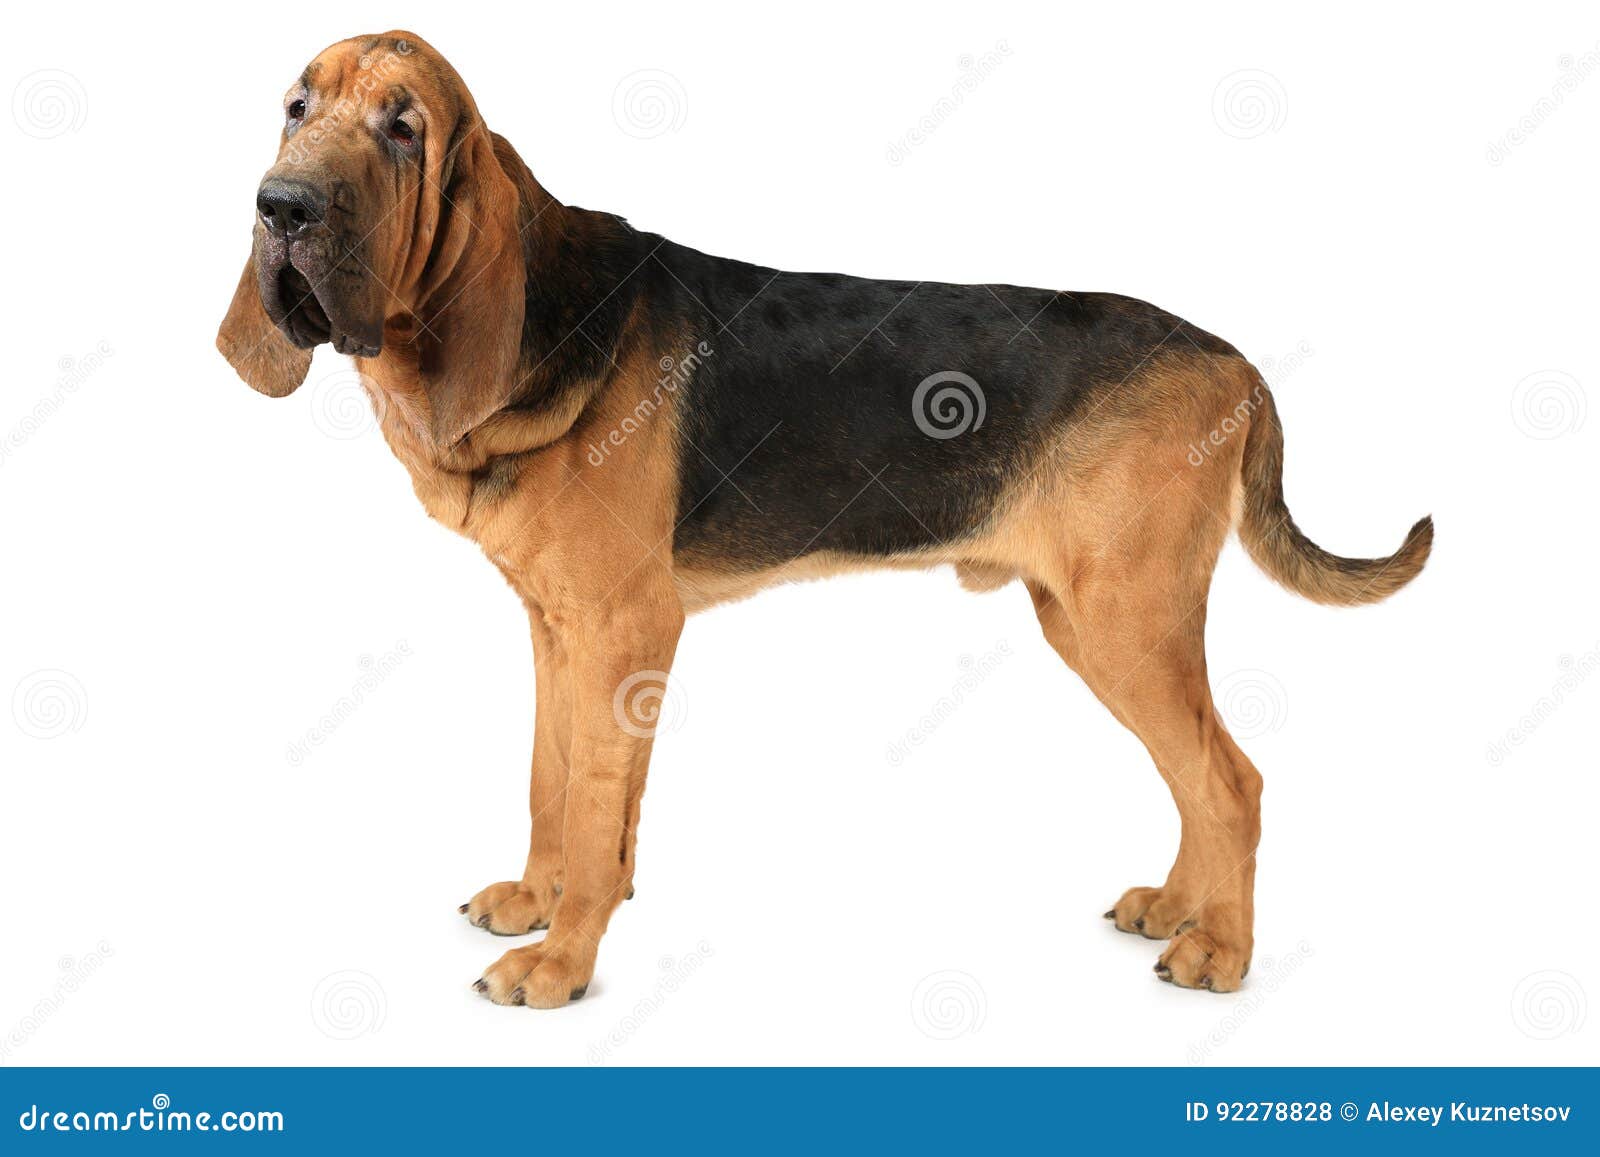 bloodhound dog over white background